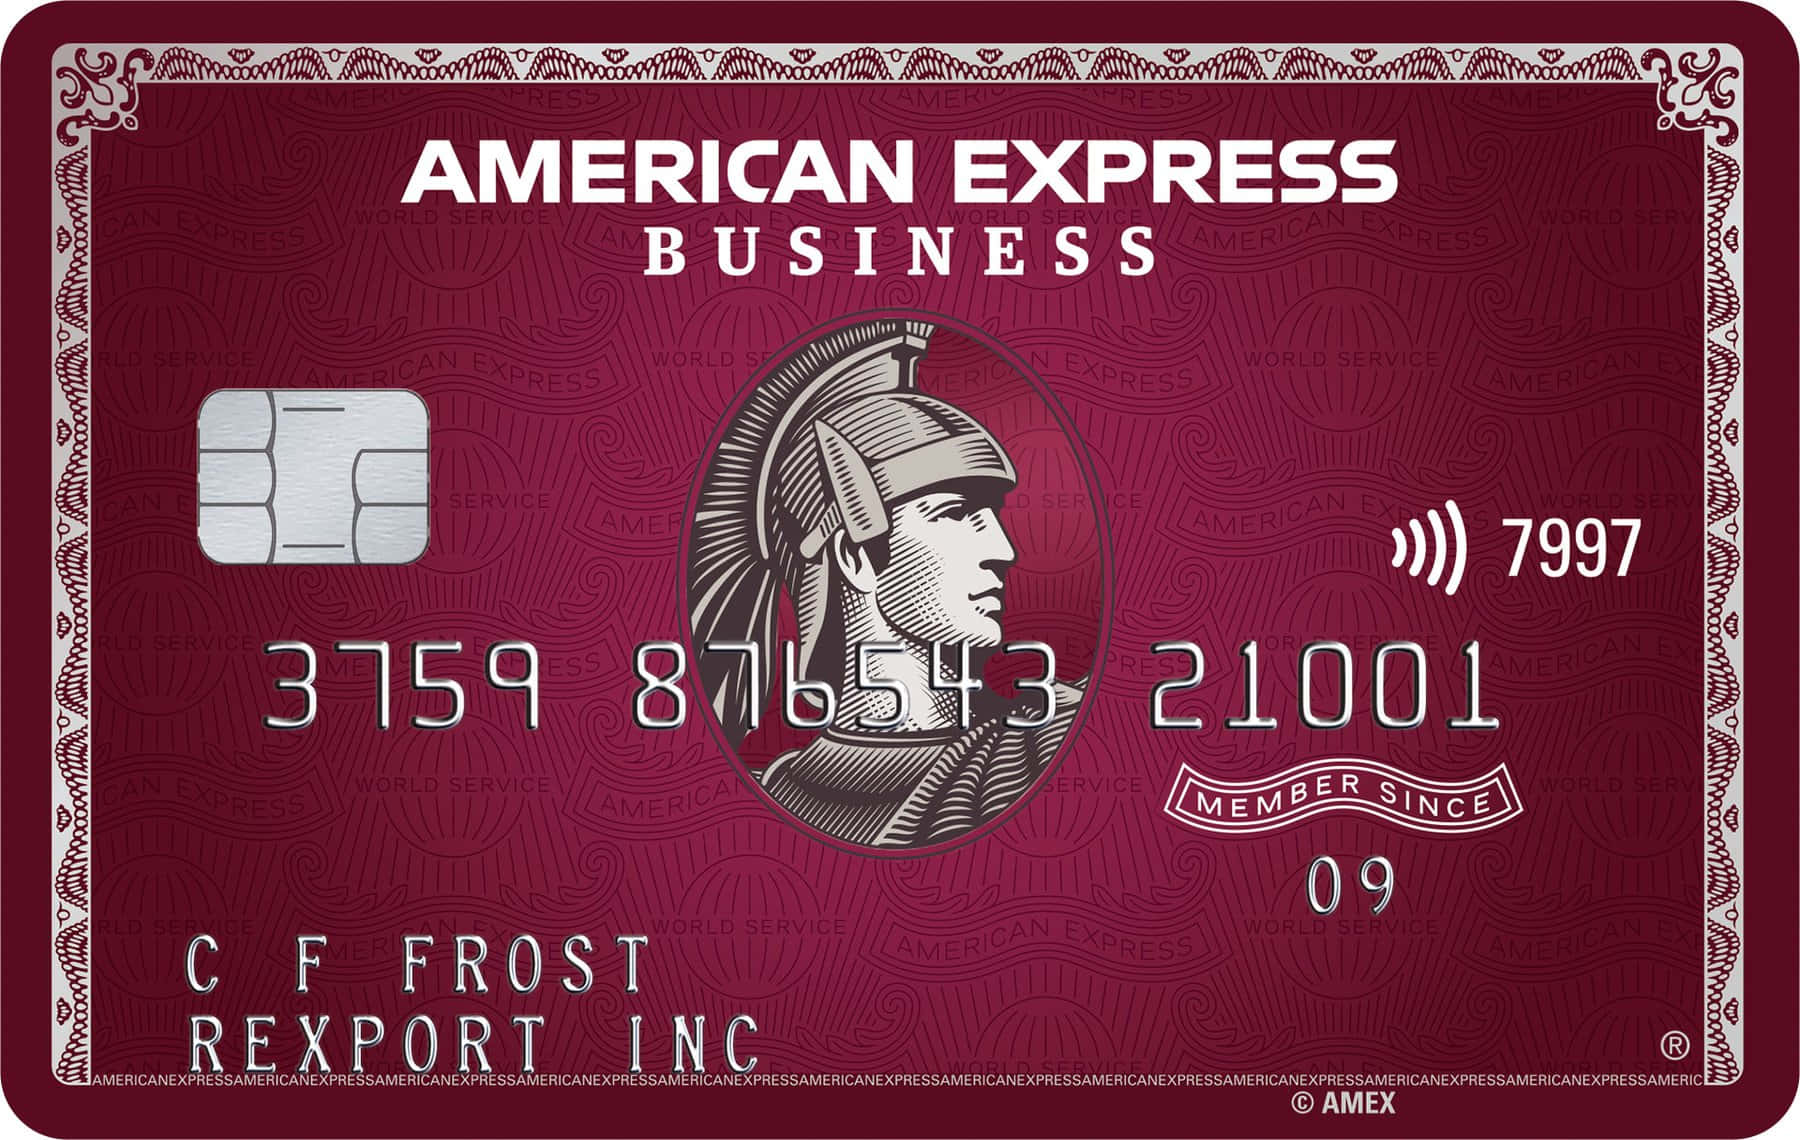 Dateun Capricho Con American Express.